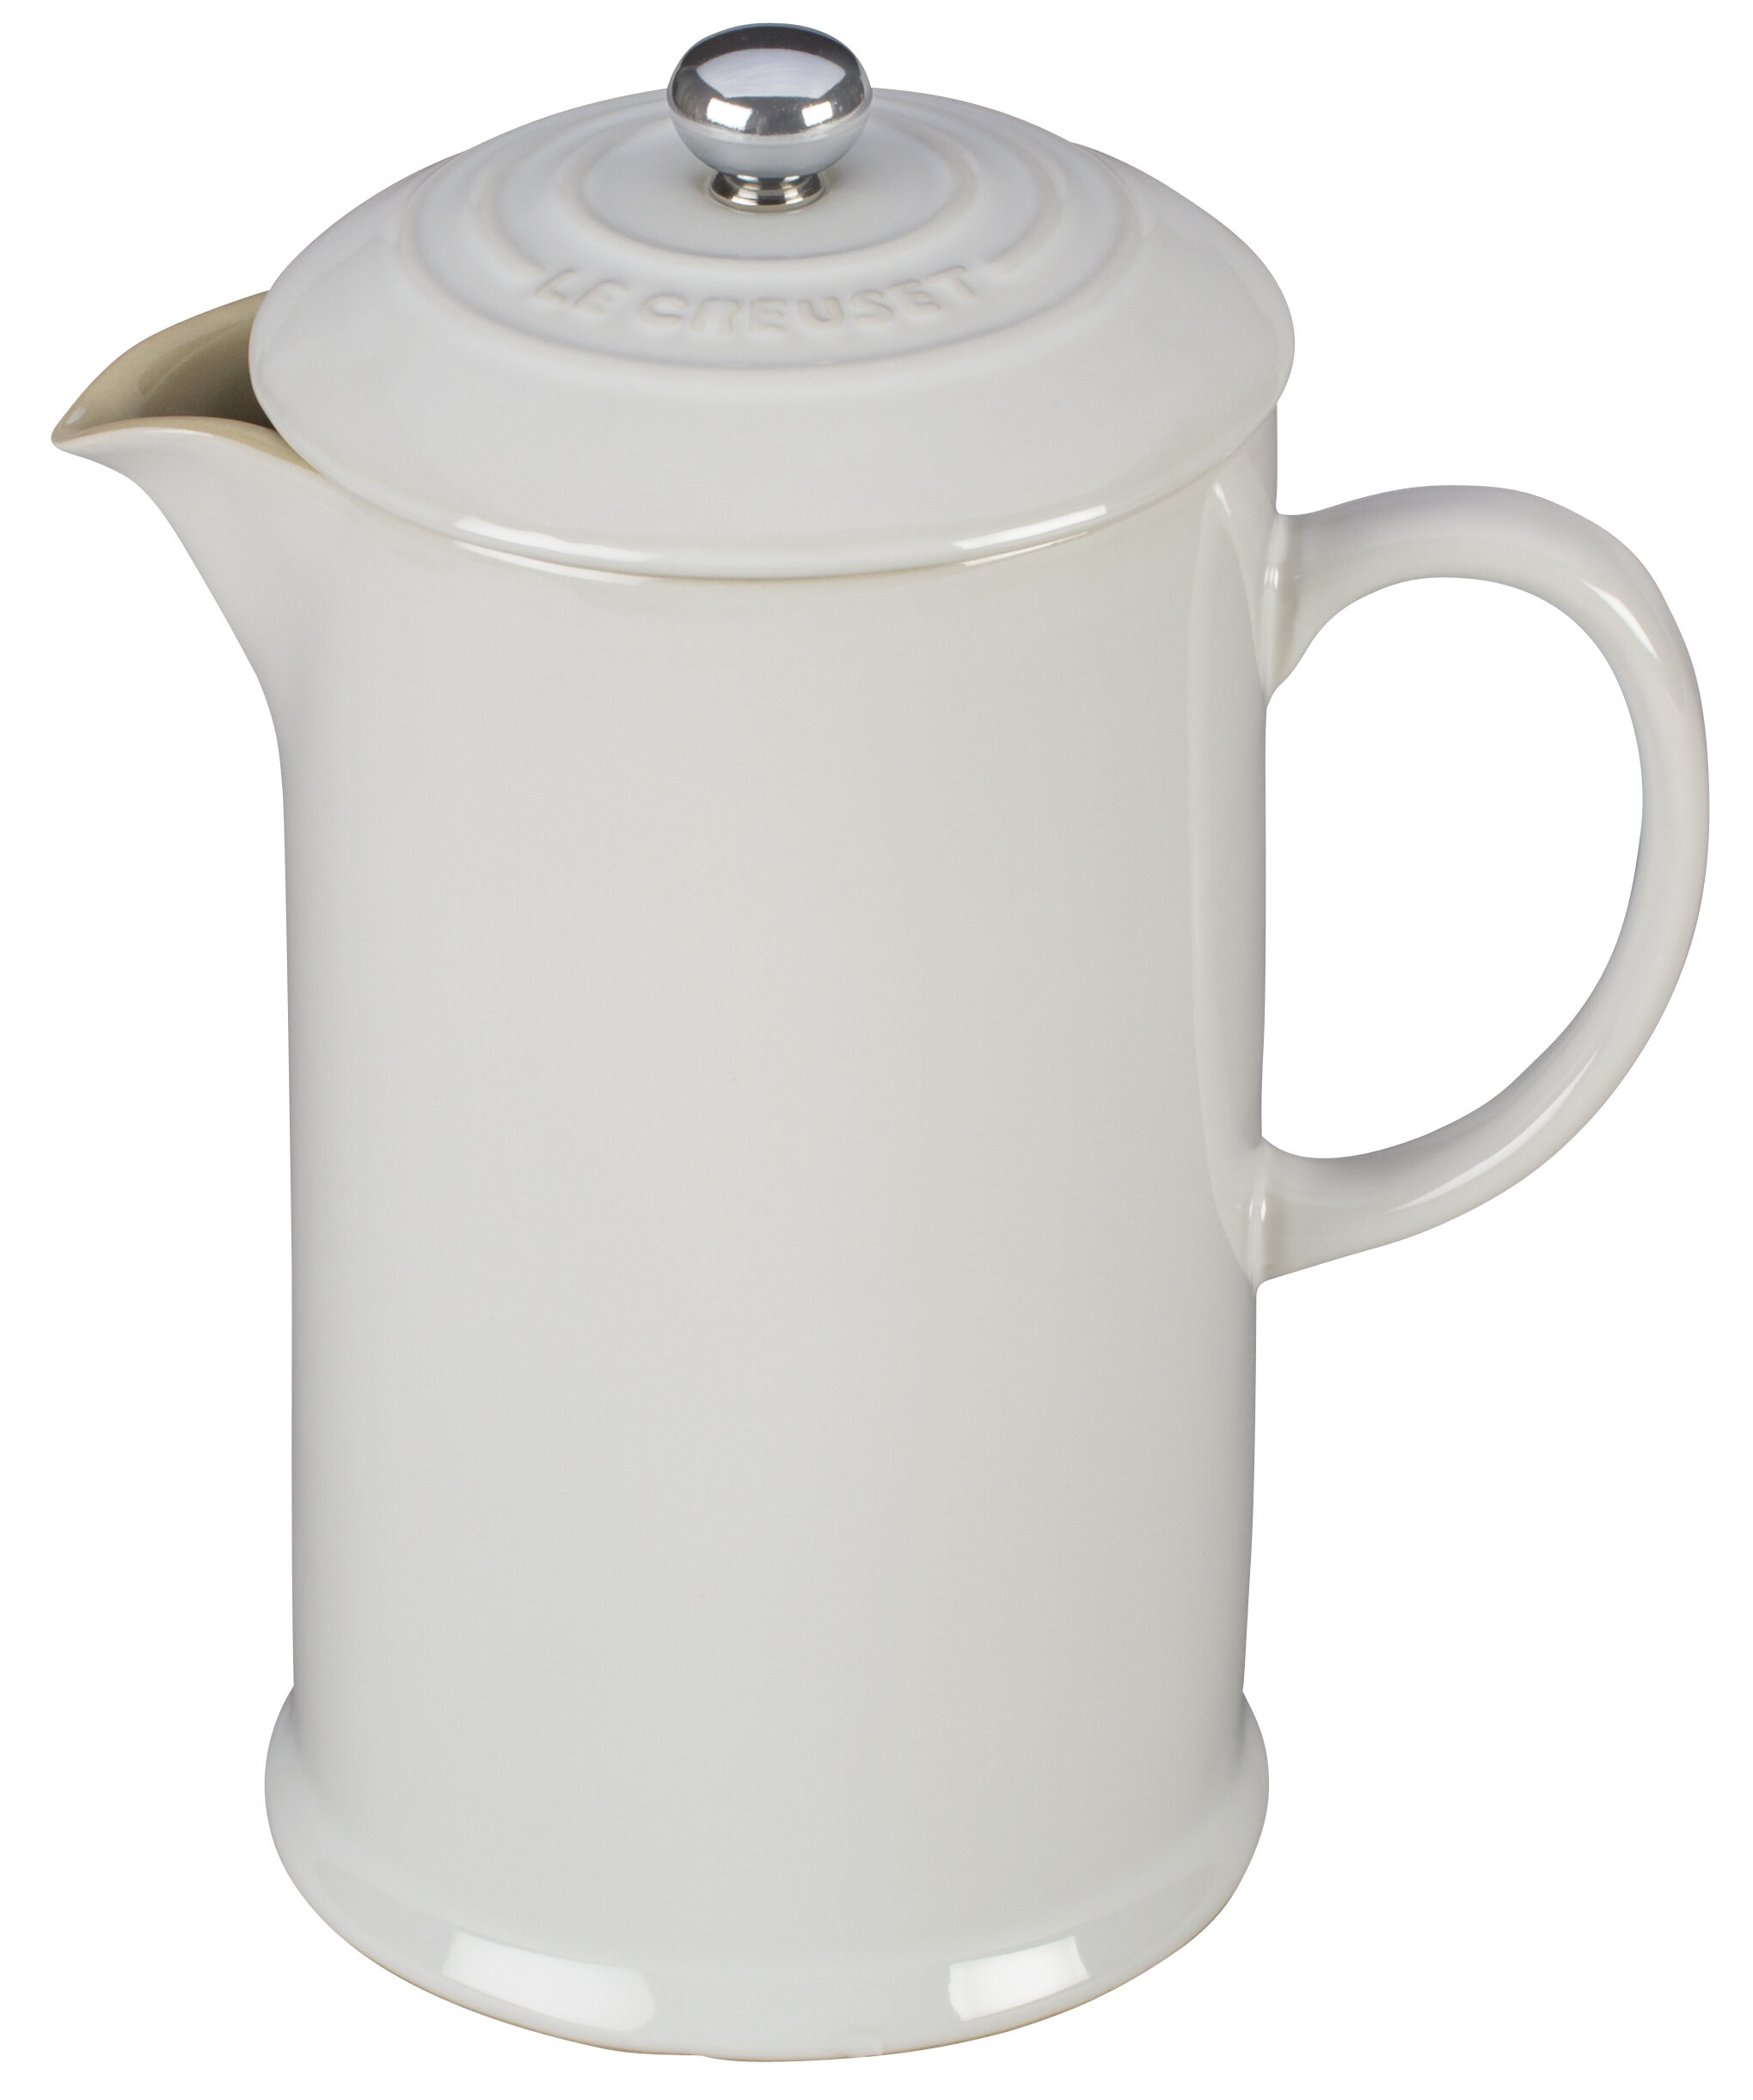 Licorice pods K-Cup compatible TEA PODS $8.99